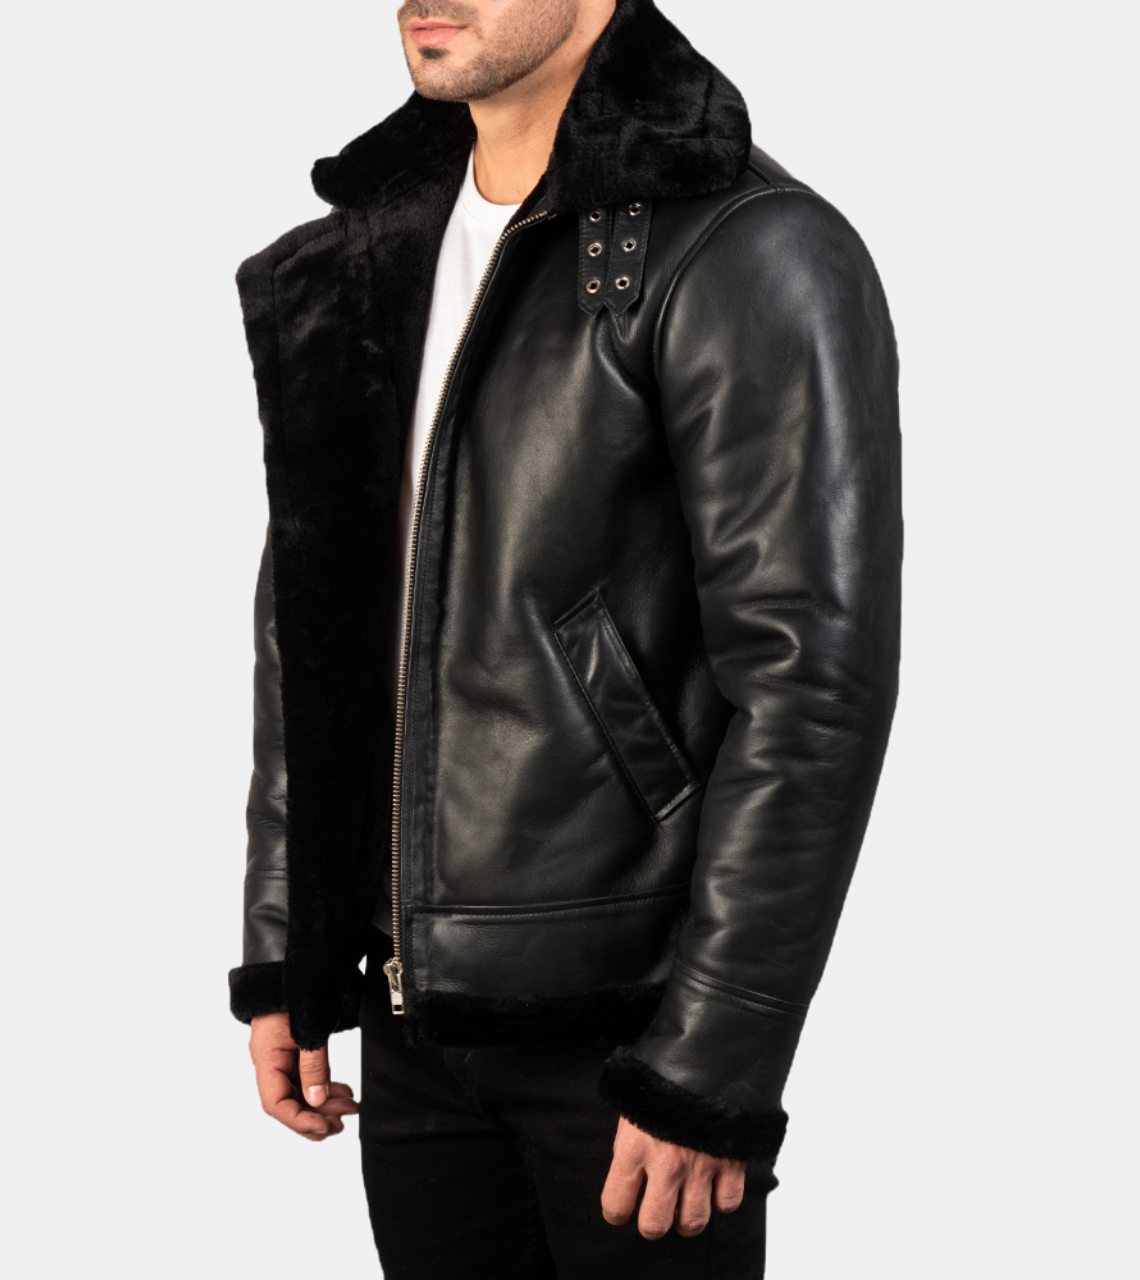 Lazarus Black Shearling Leather Jacket For Men's